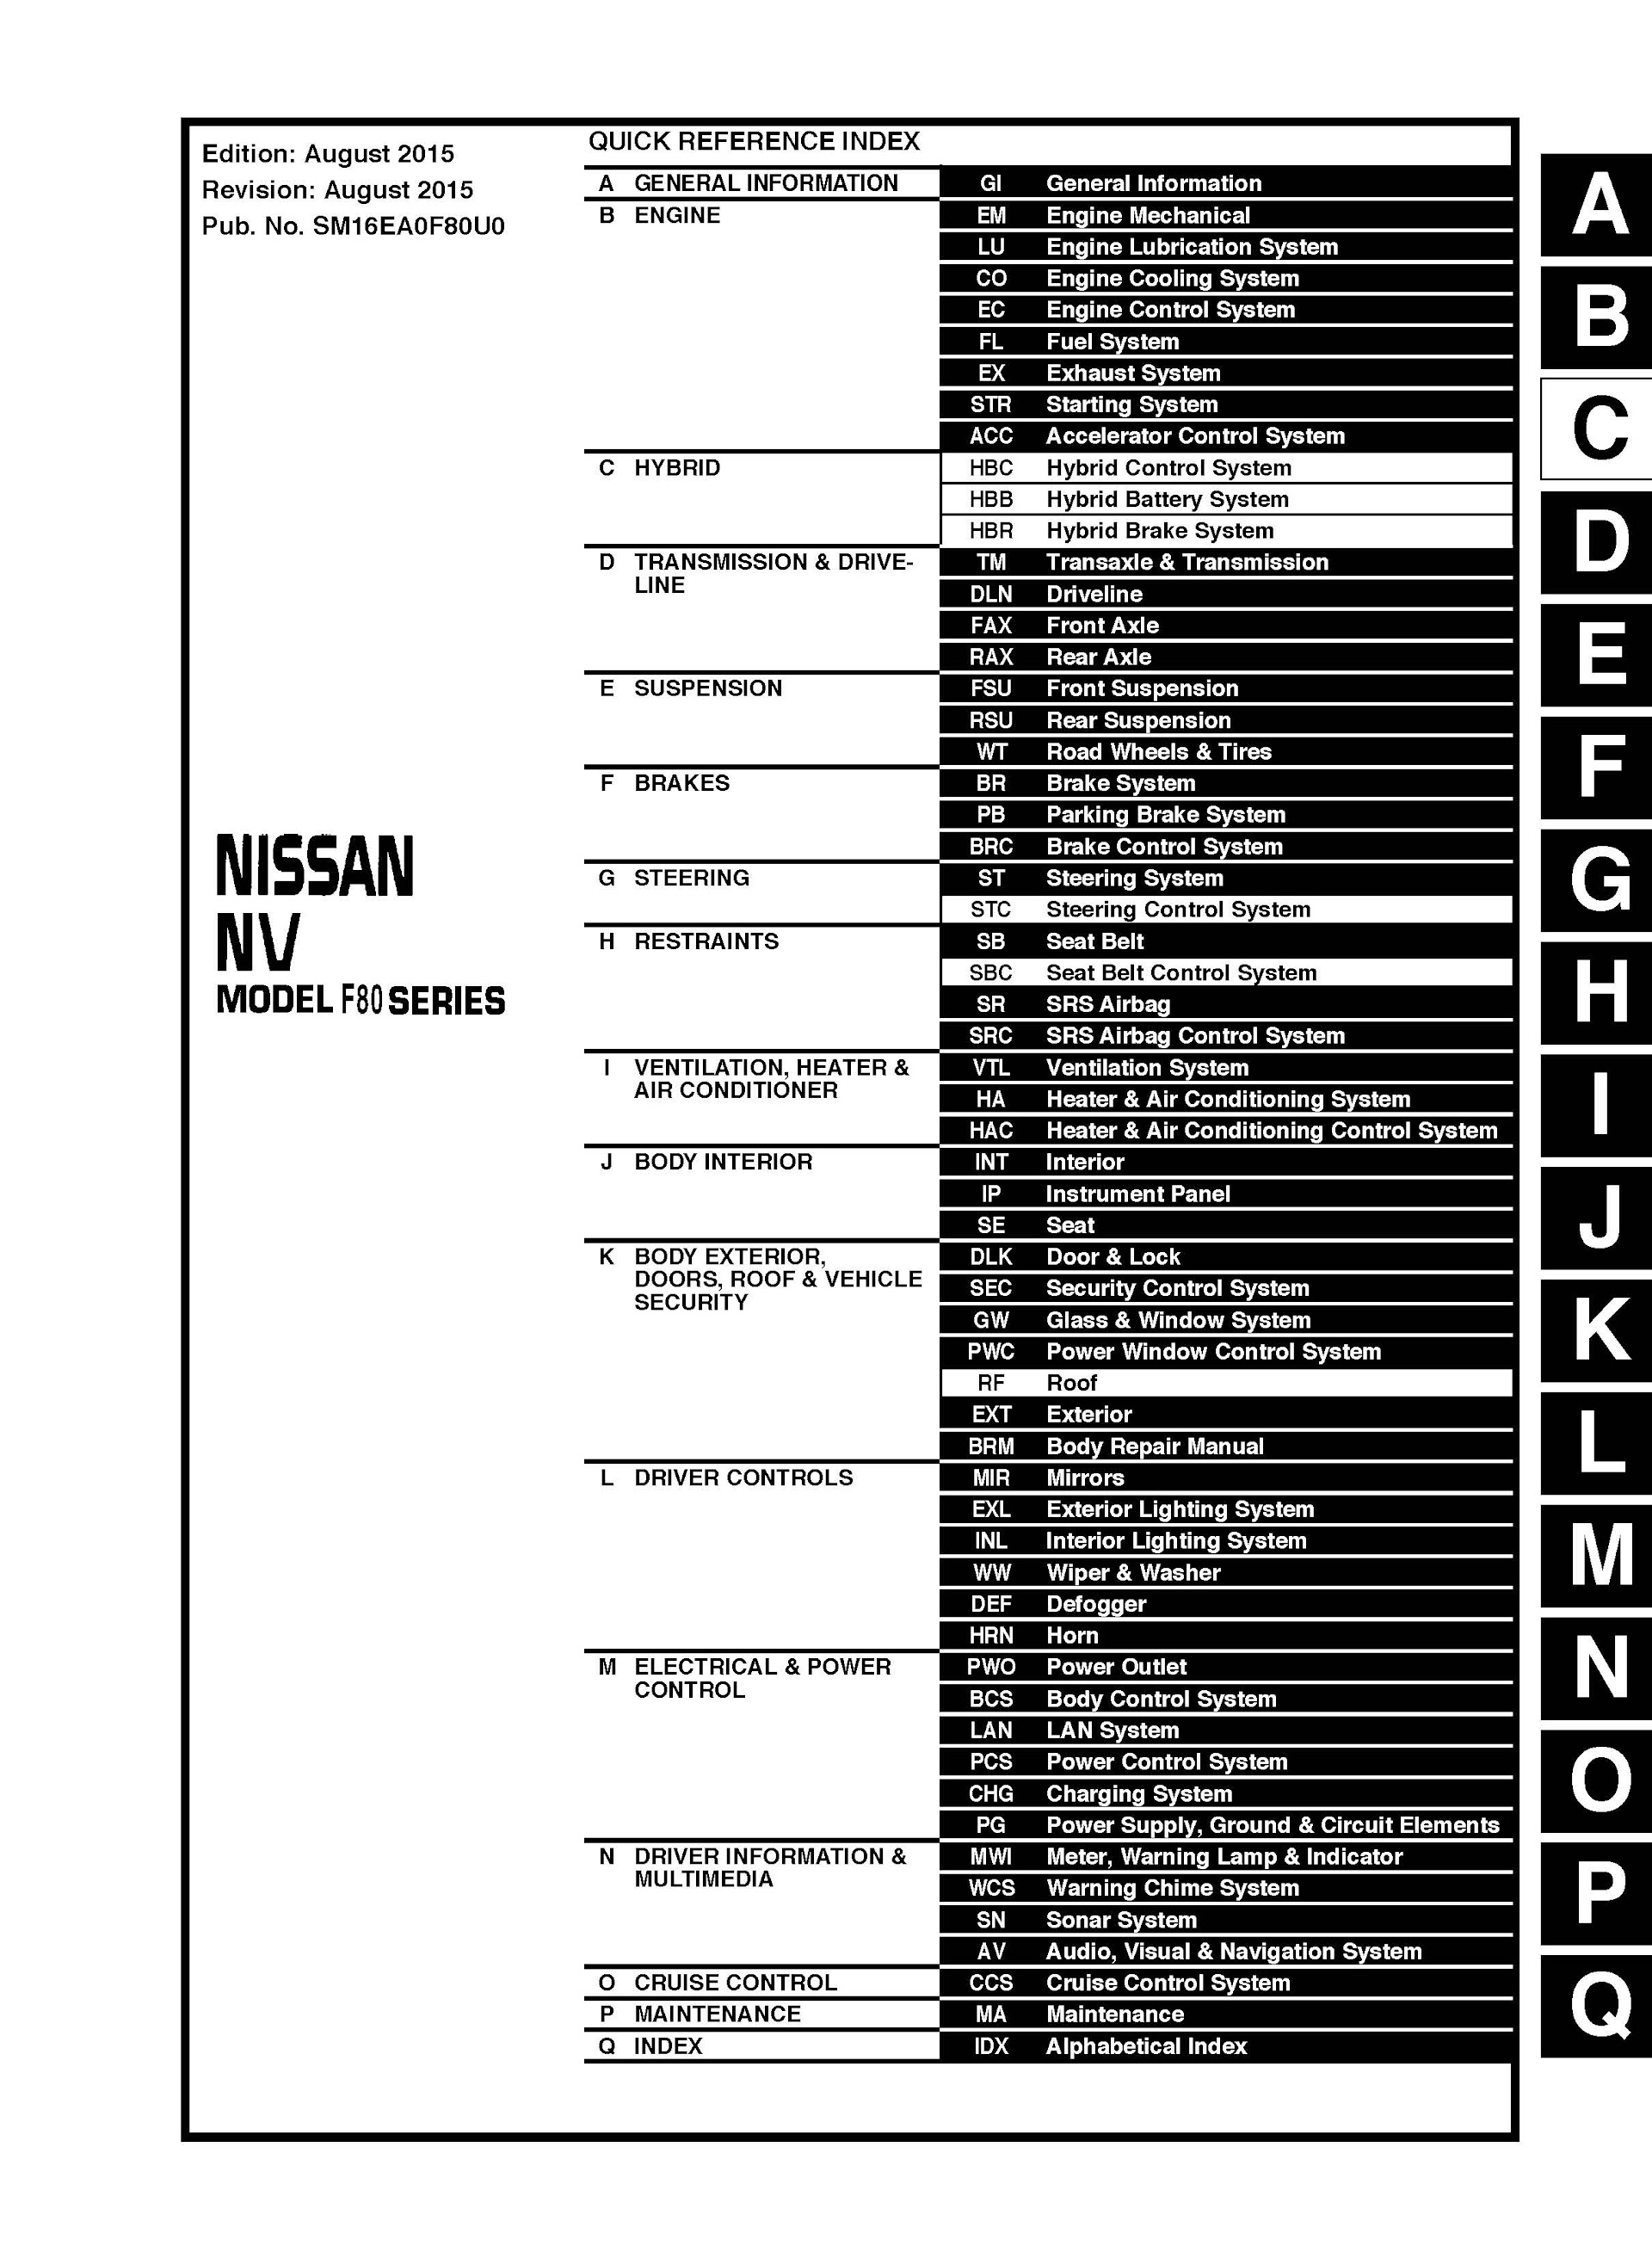 Table of Conetns 2016 Nissan NV Passenger Repair Manual